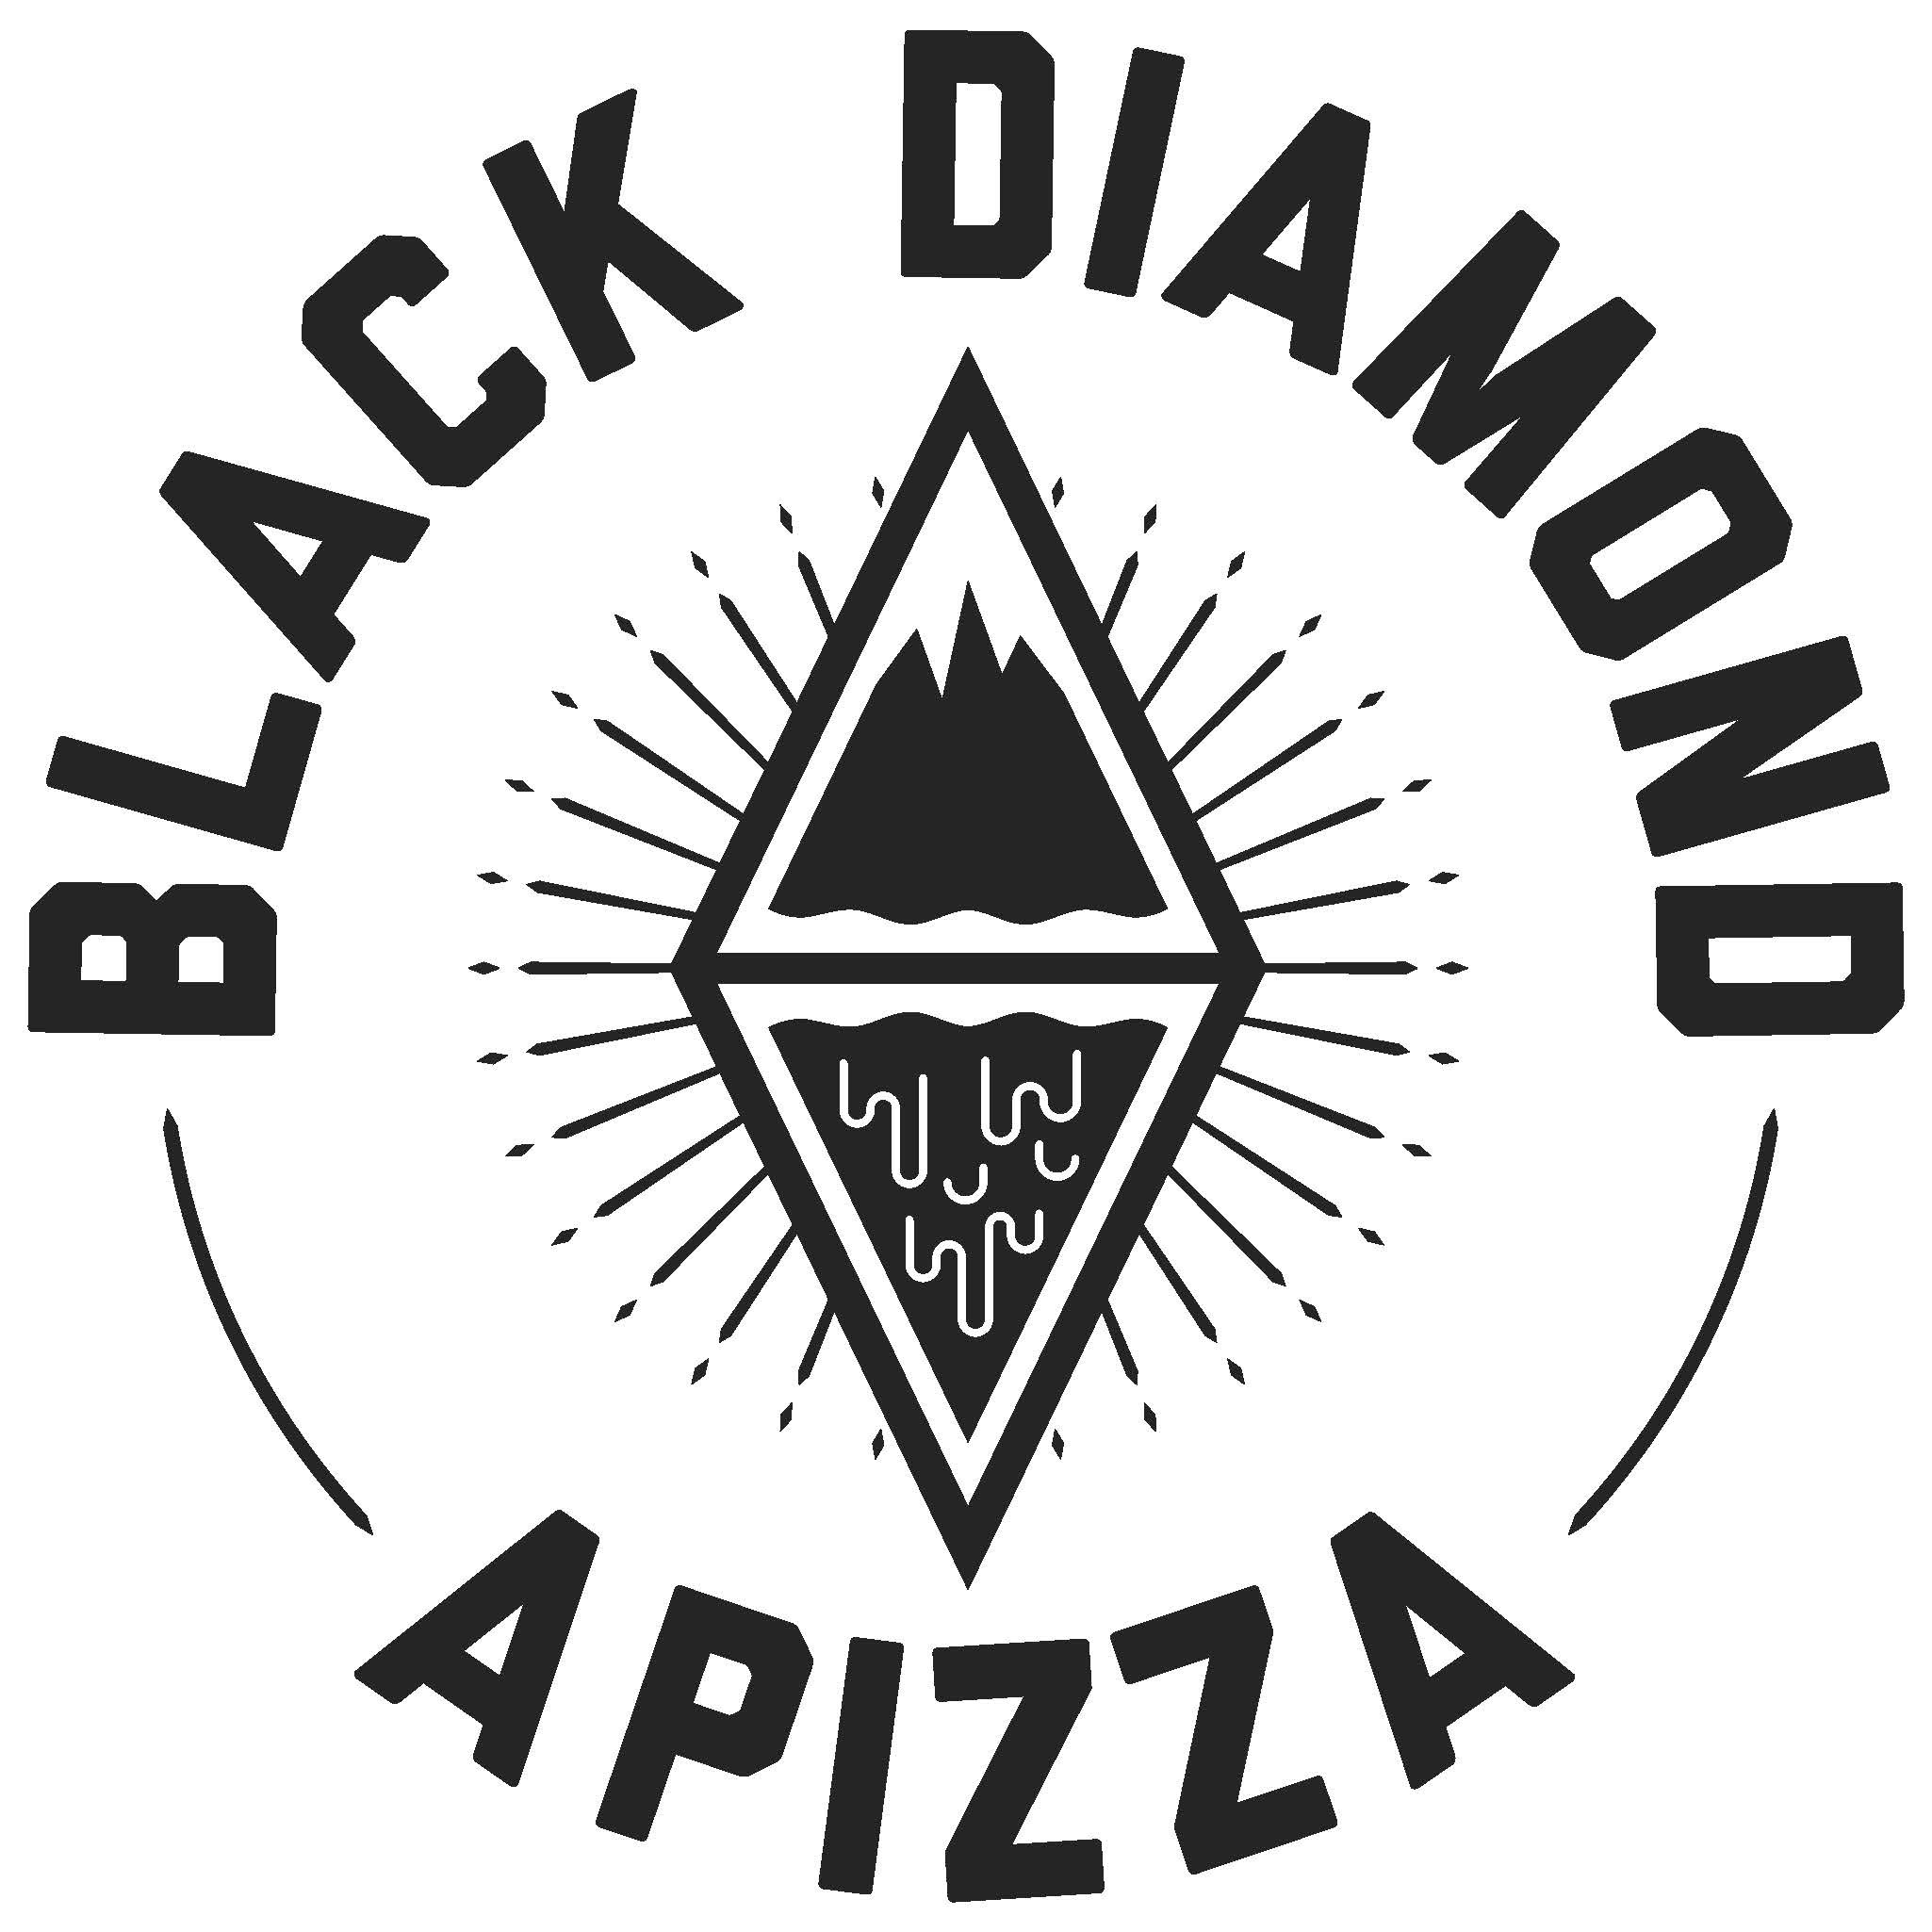 Black Diamond Apizza